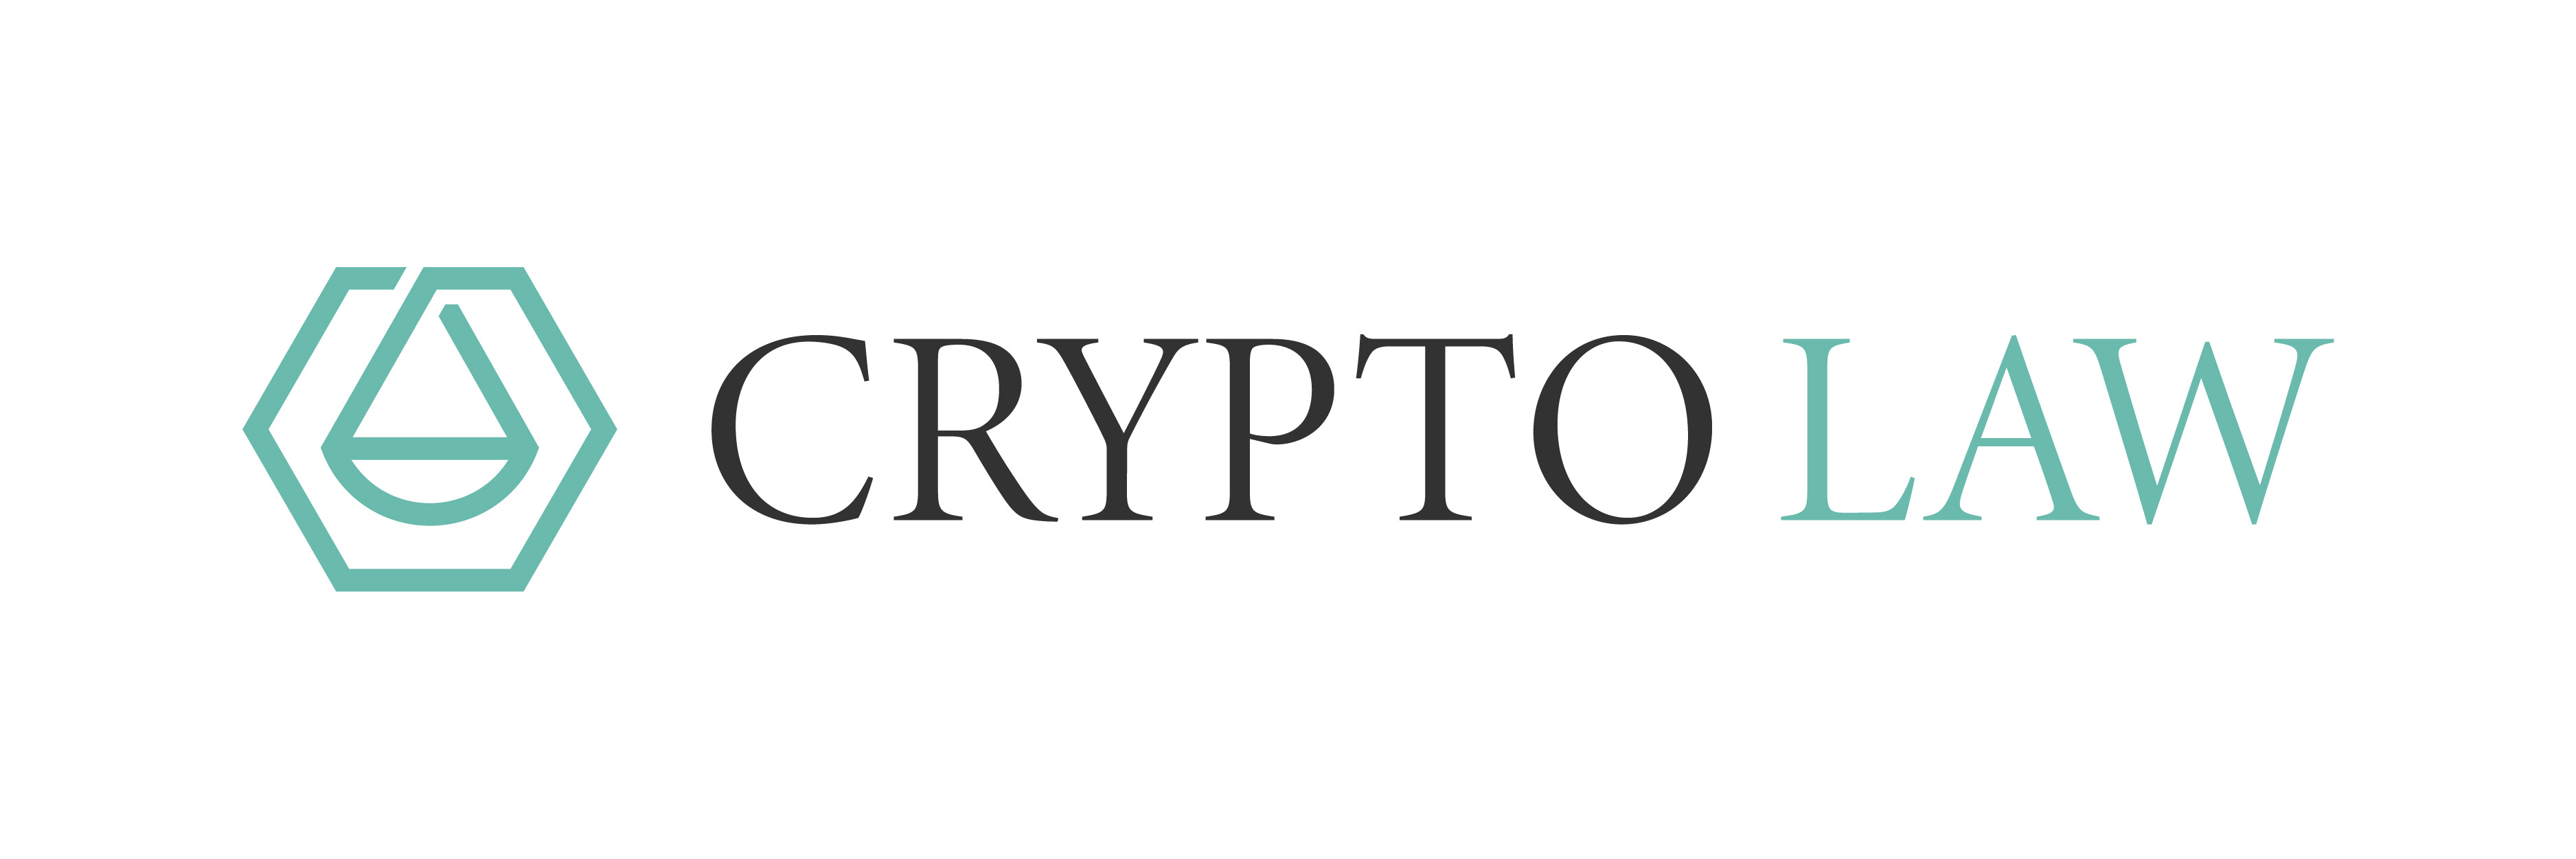 CryptoLaw’s Newsletter